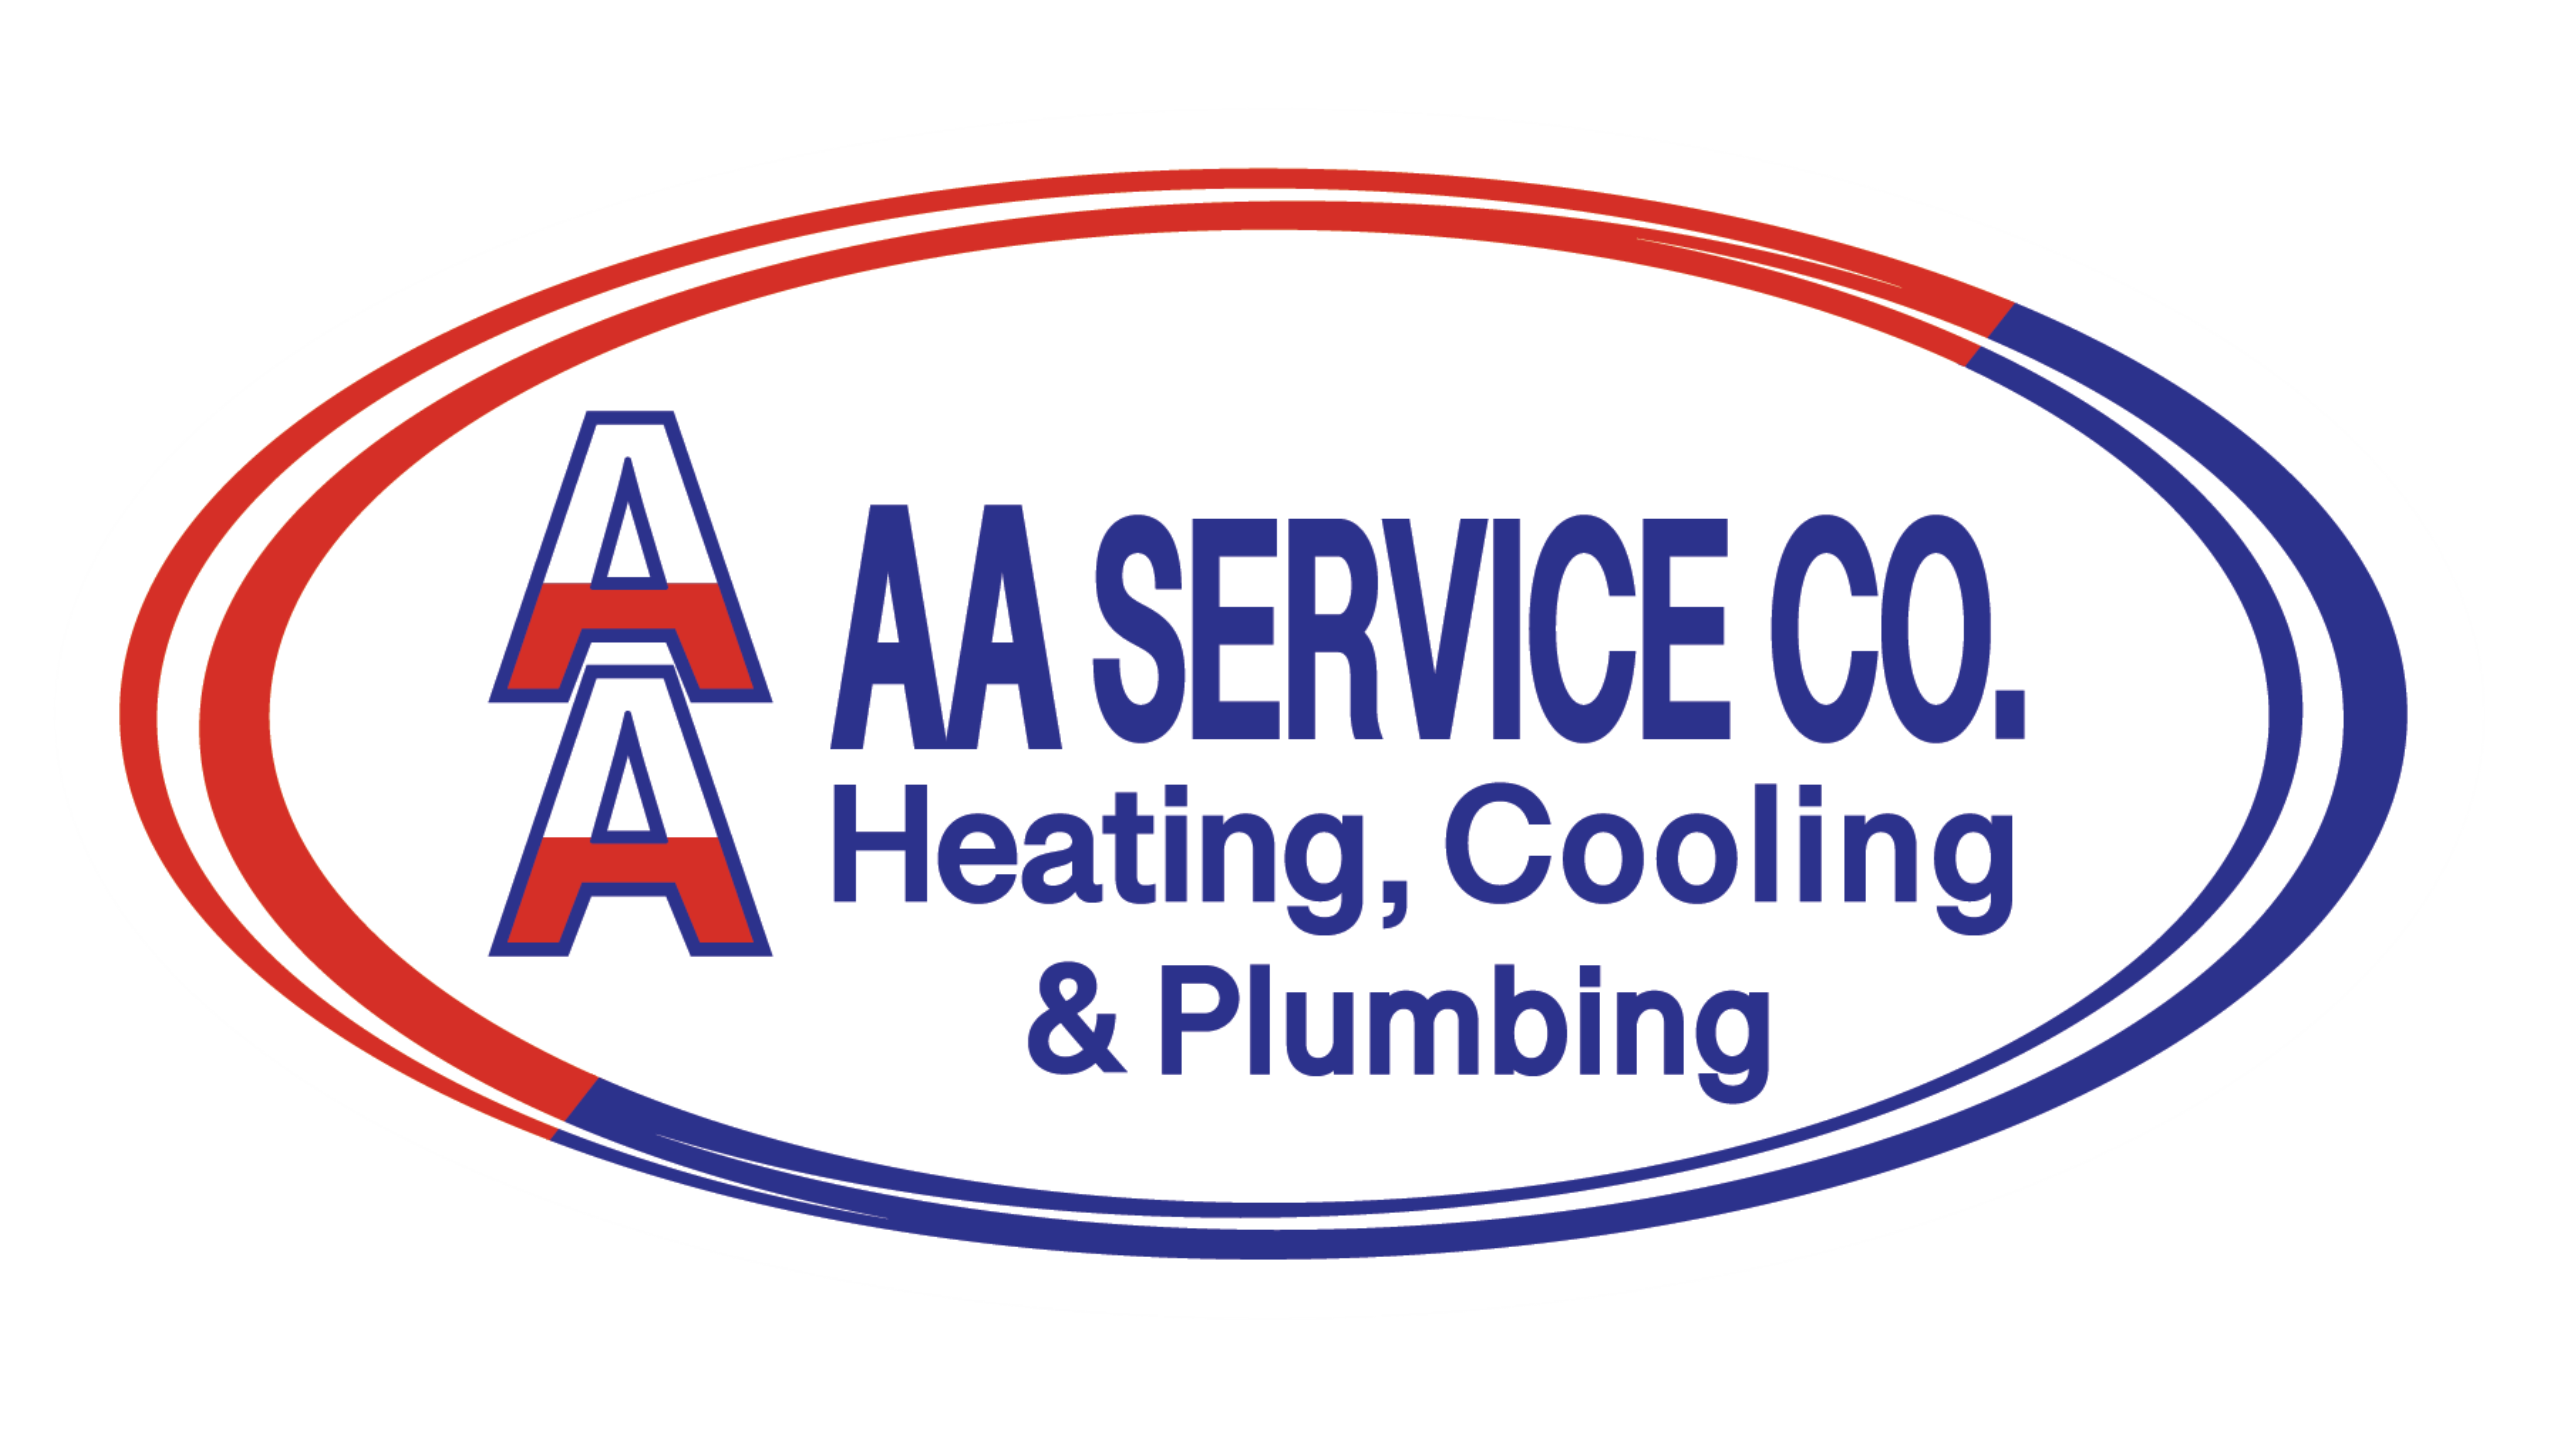 AA Service Co. Heating, Cooling & Plumbing Logo